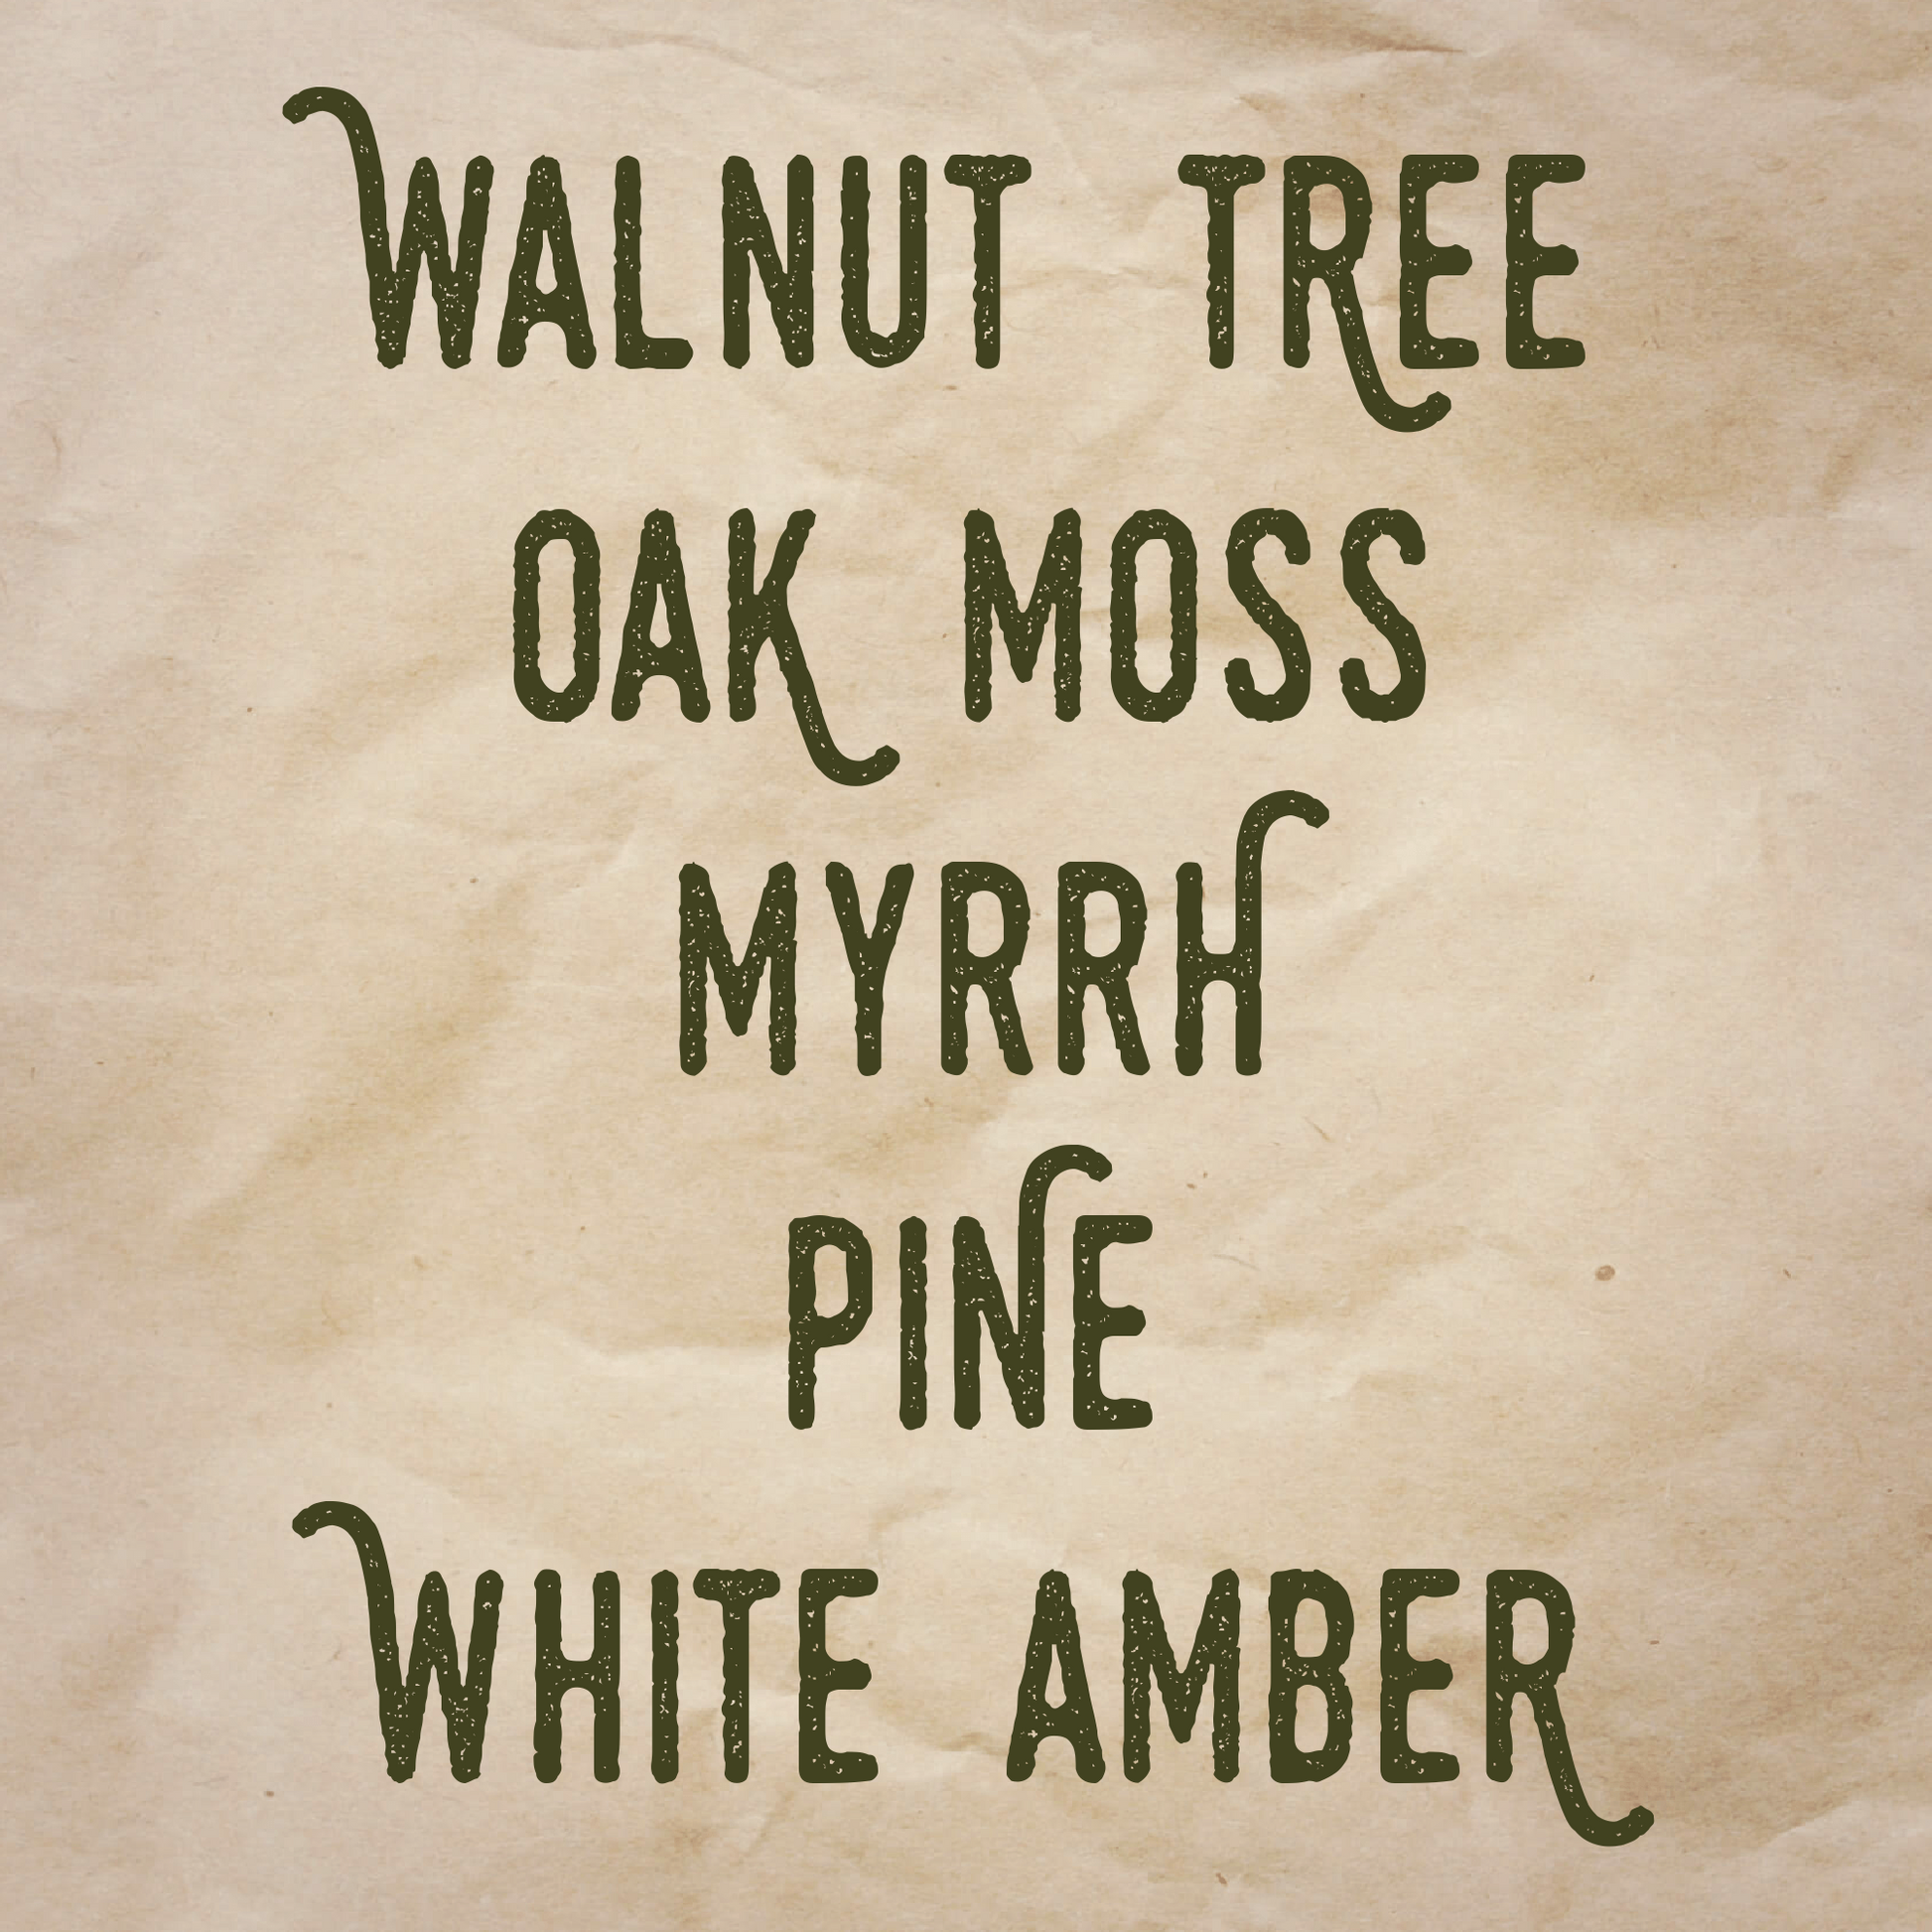 House of Usher scent notes: Walnut tree, oak moss, myrrh, pine, and white amber. 